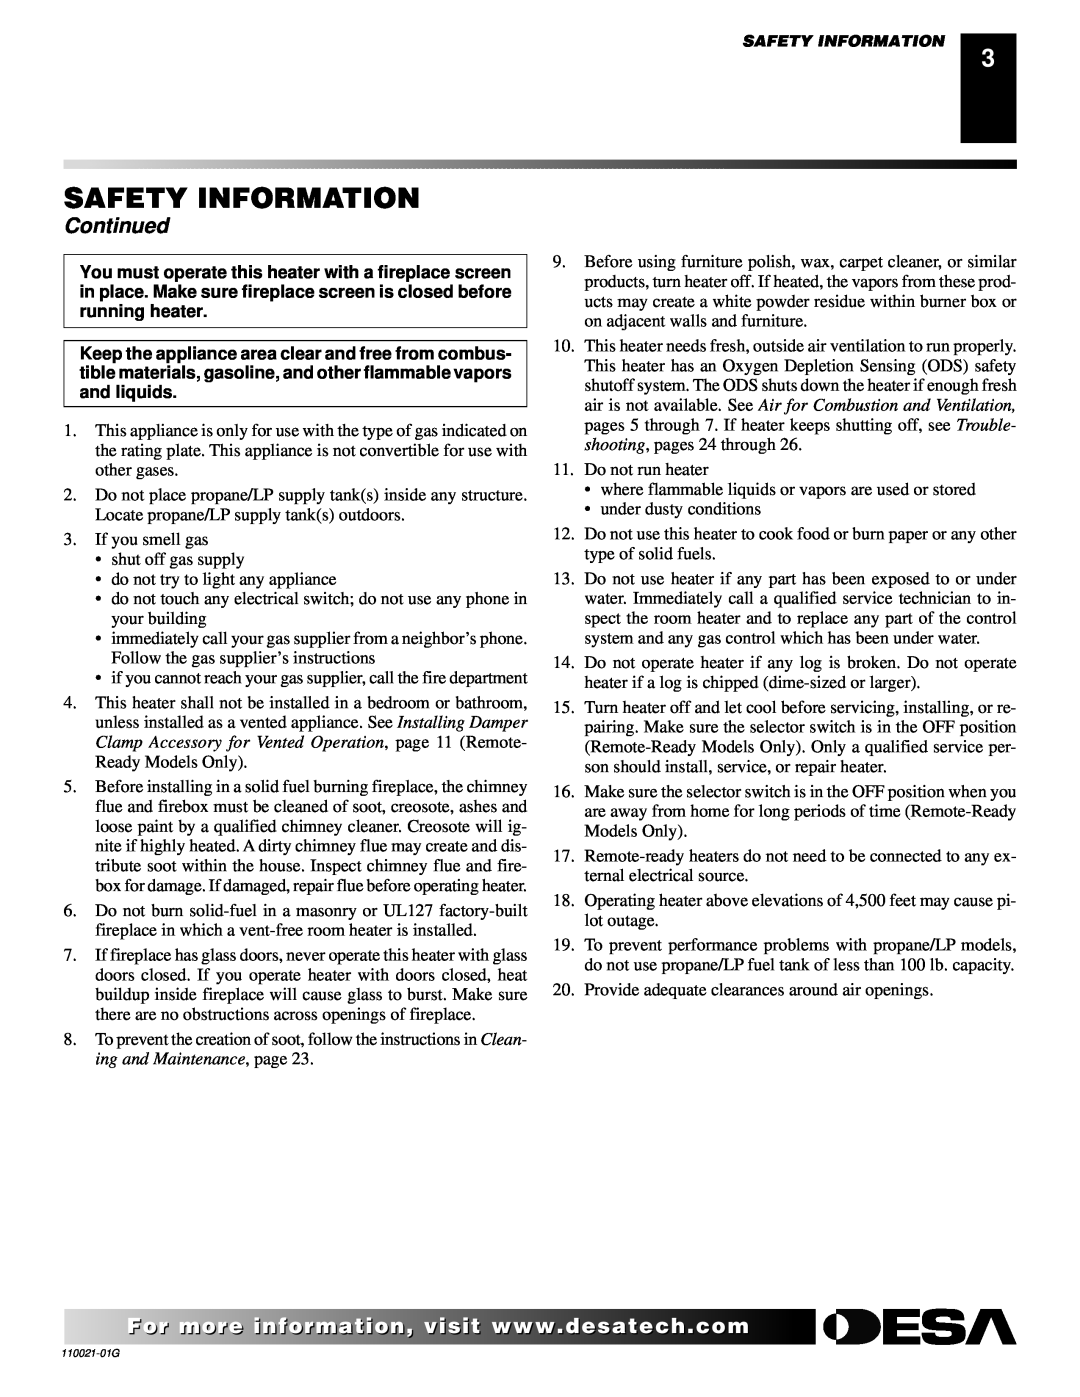 Desa CSG3930NR, CSG3930PR installation manual Continued, Safety Information 